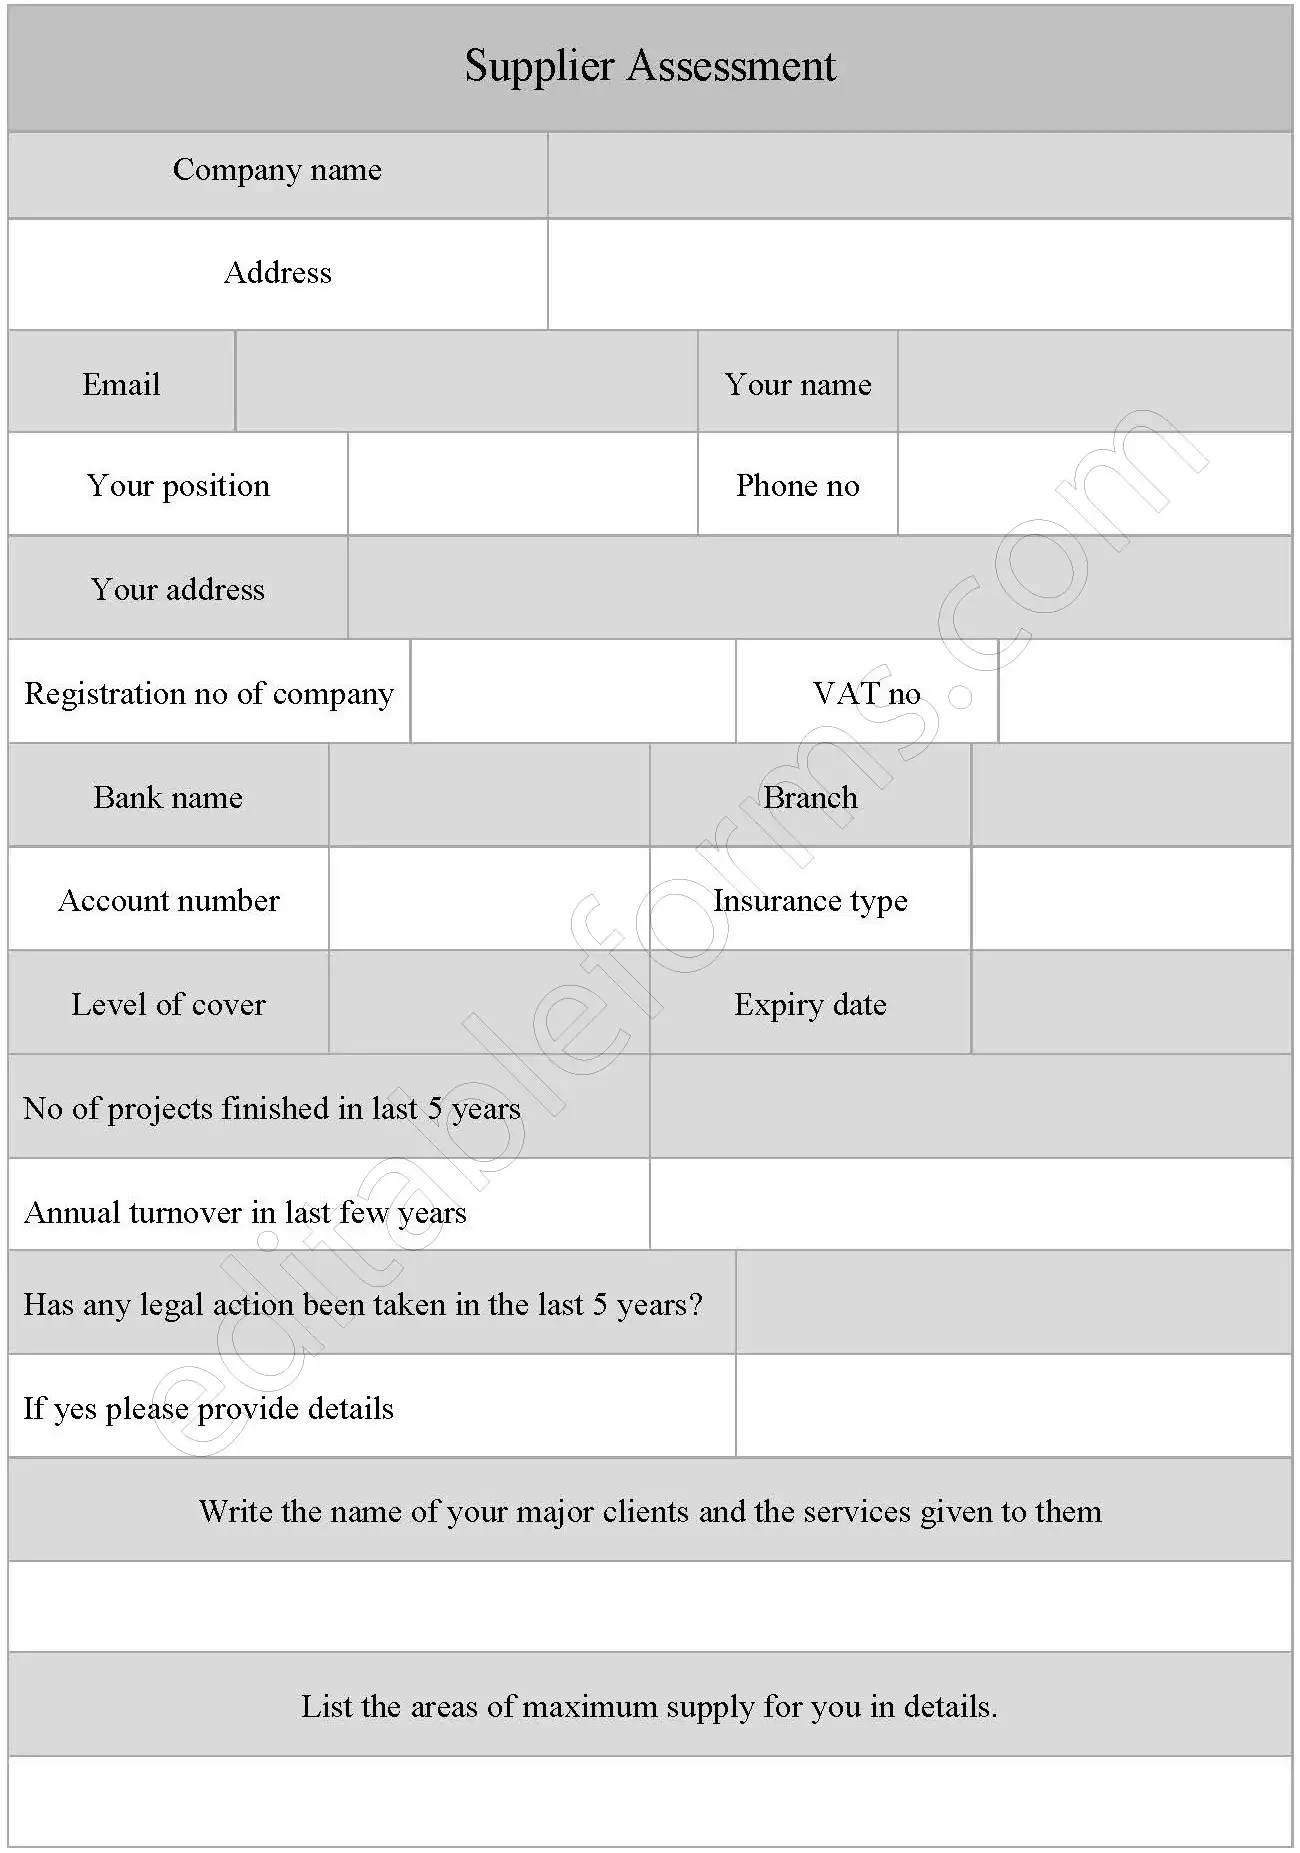 Supplier Assessment Fillable PDF Form